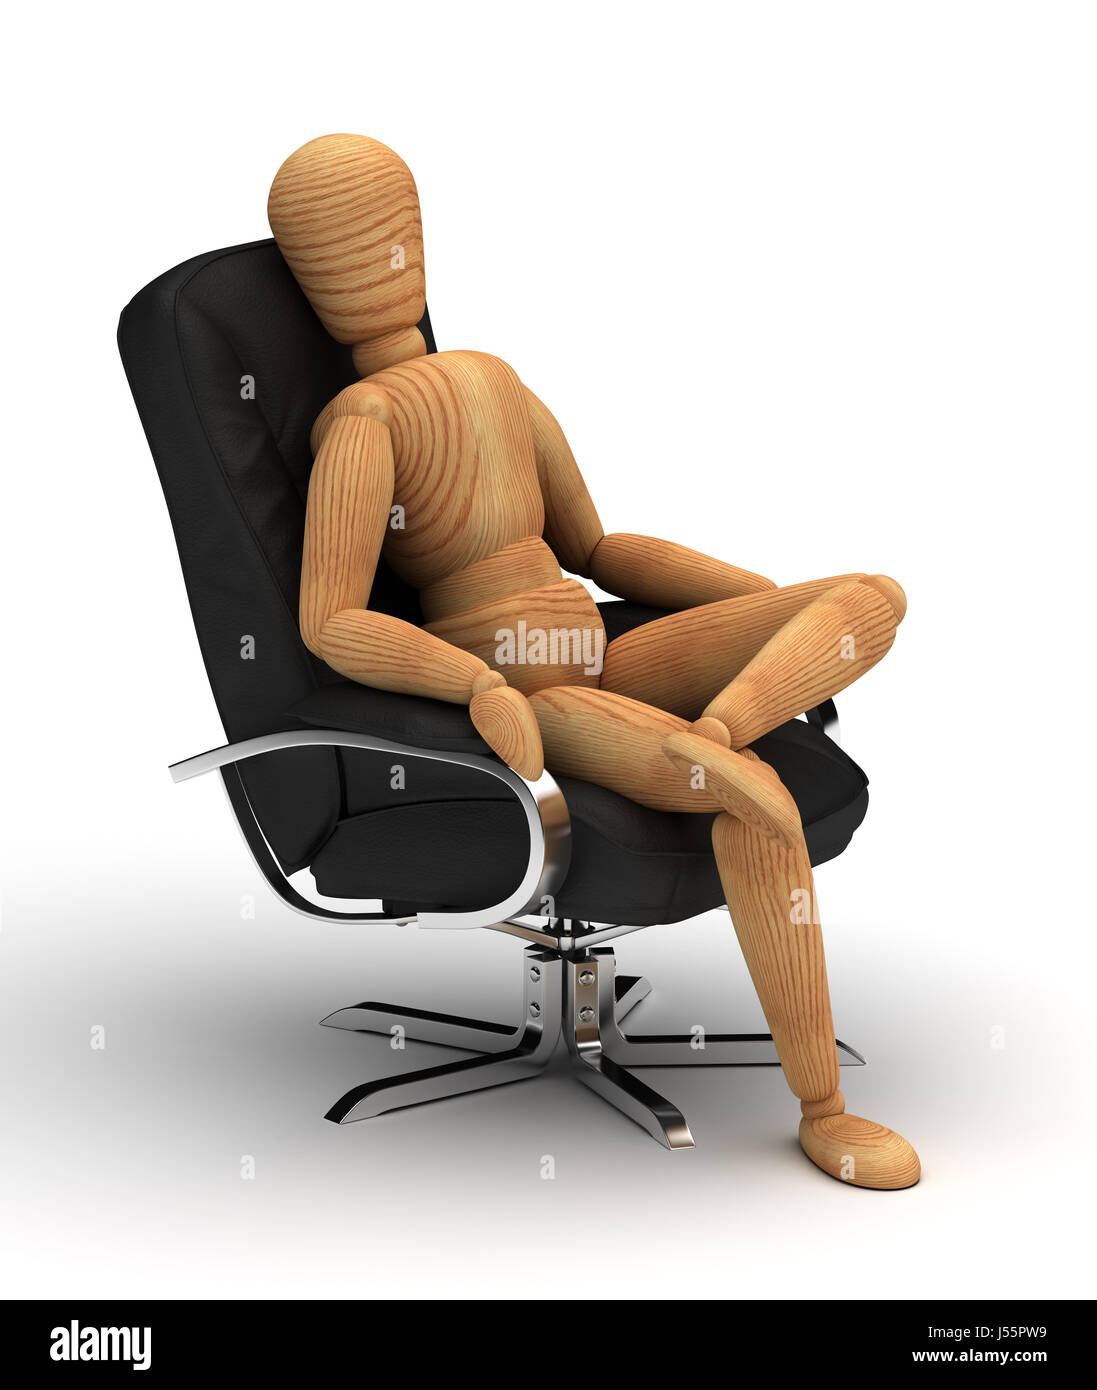 Rilassarsi seduti sulla sedia nero Foto Stock